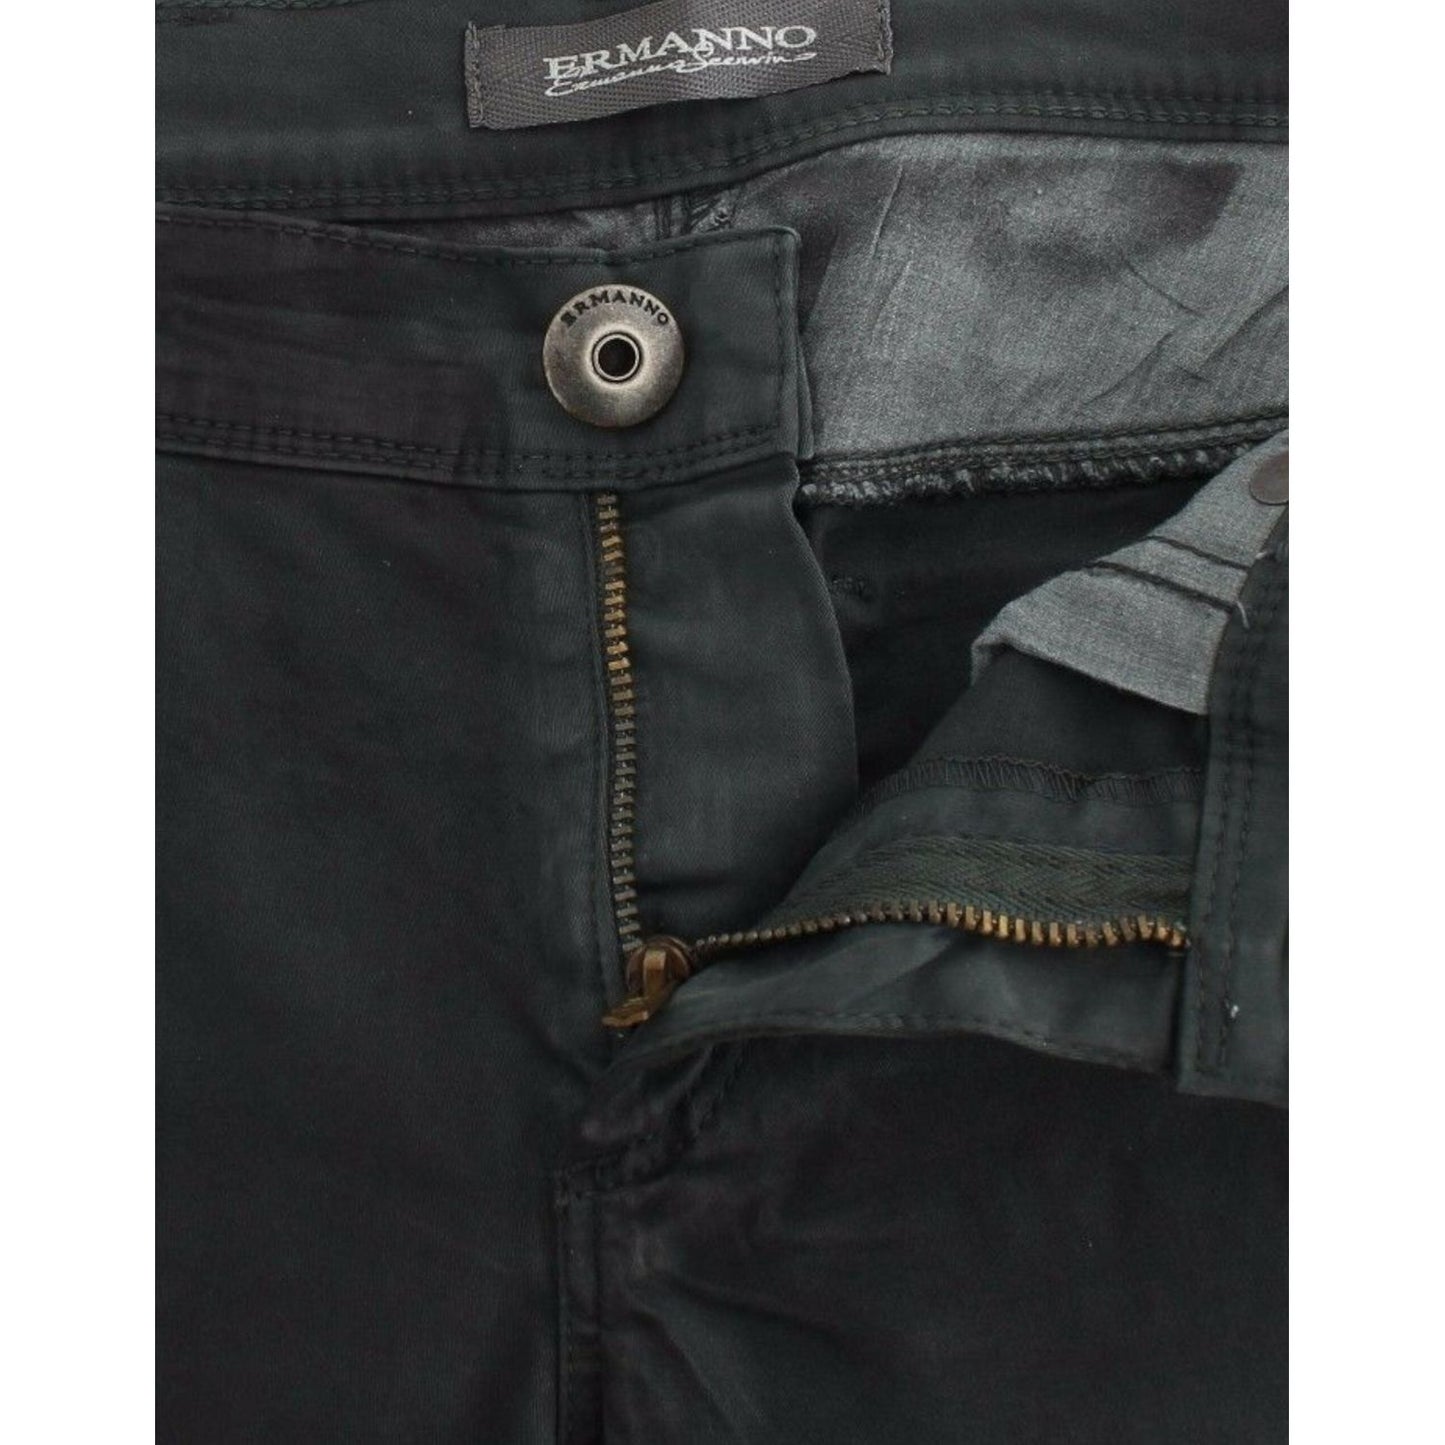 Ermanno Scervino Elegant Dark Green Slim Fit Jeans green-slim-jeans-denim-pants-straight-leg-stretch